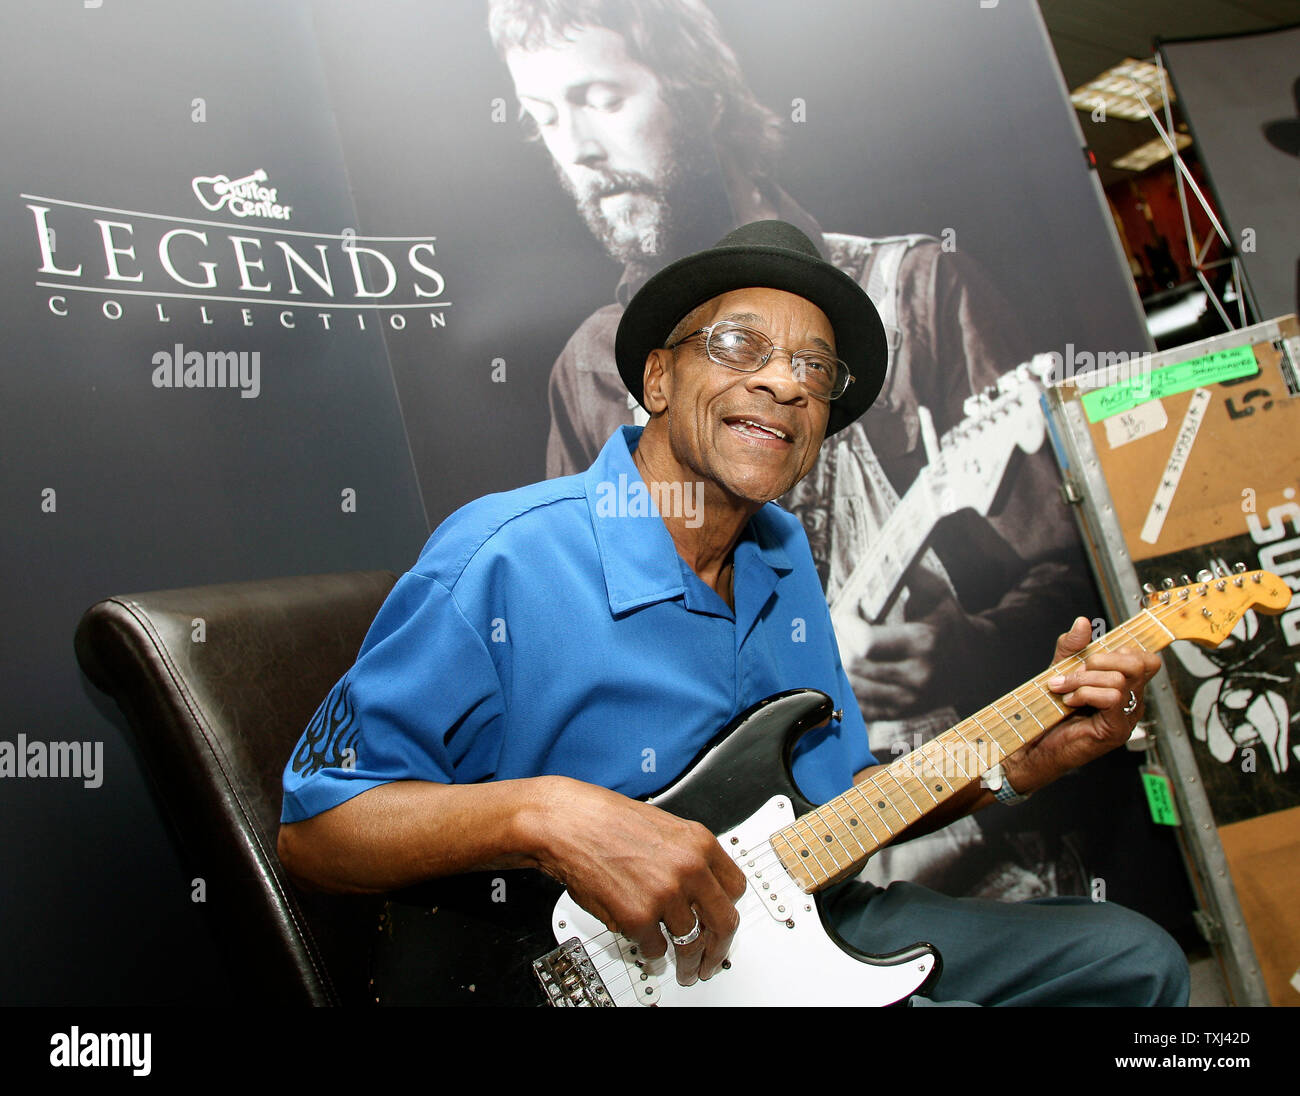 El legendario artista de blues Hubert Sumlin posa con Eric Clapton  